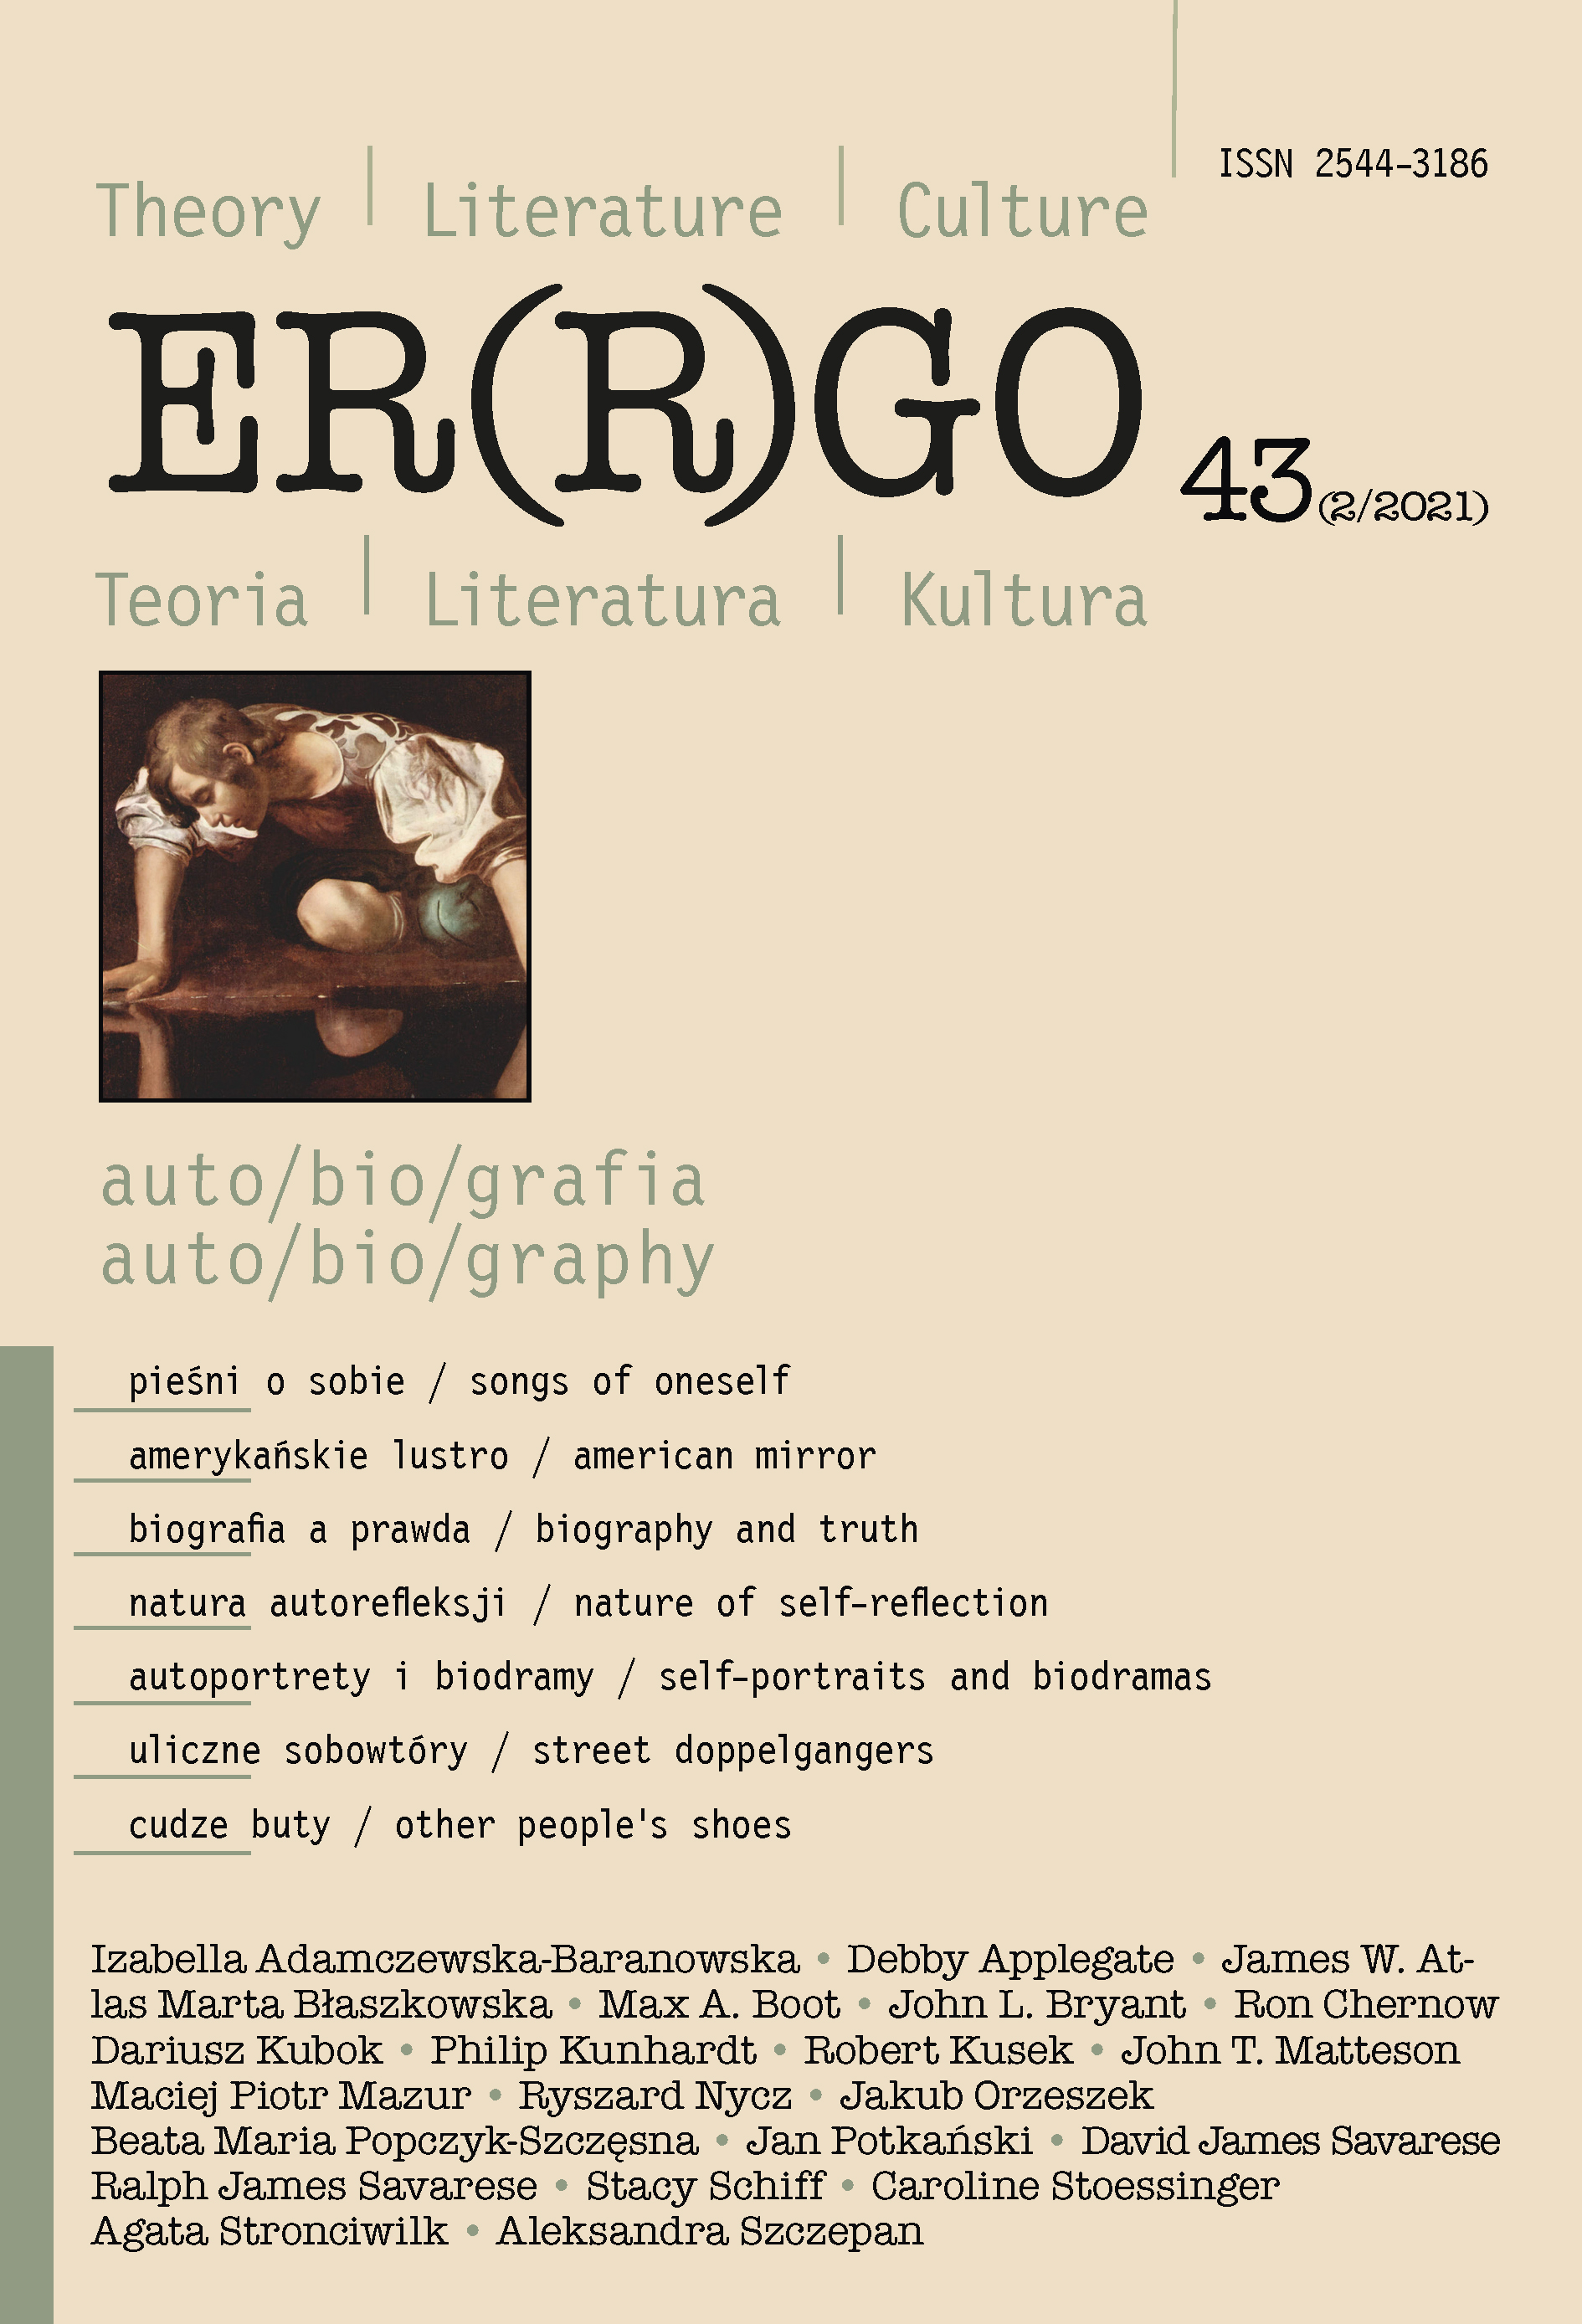 Encyclopaedierotic as (Auto)biofiction: Roland Barthes par Ewa Kuryluk Cover Image